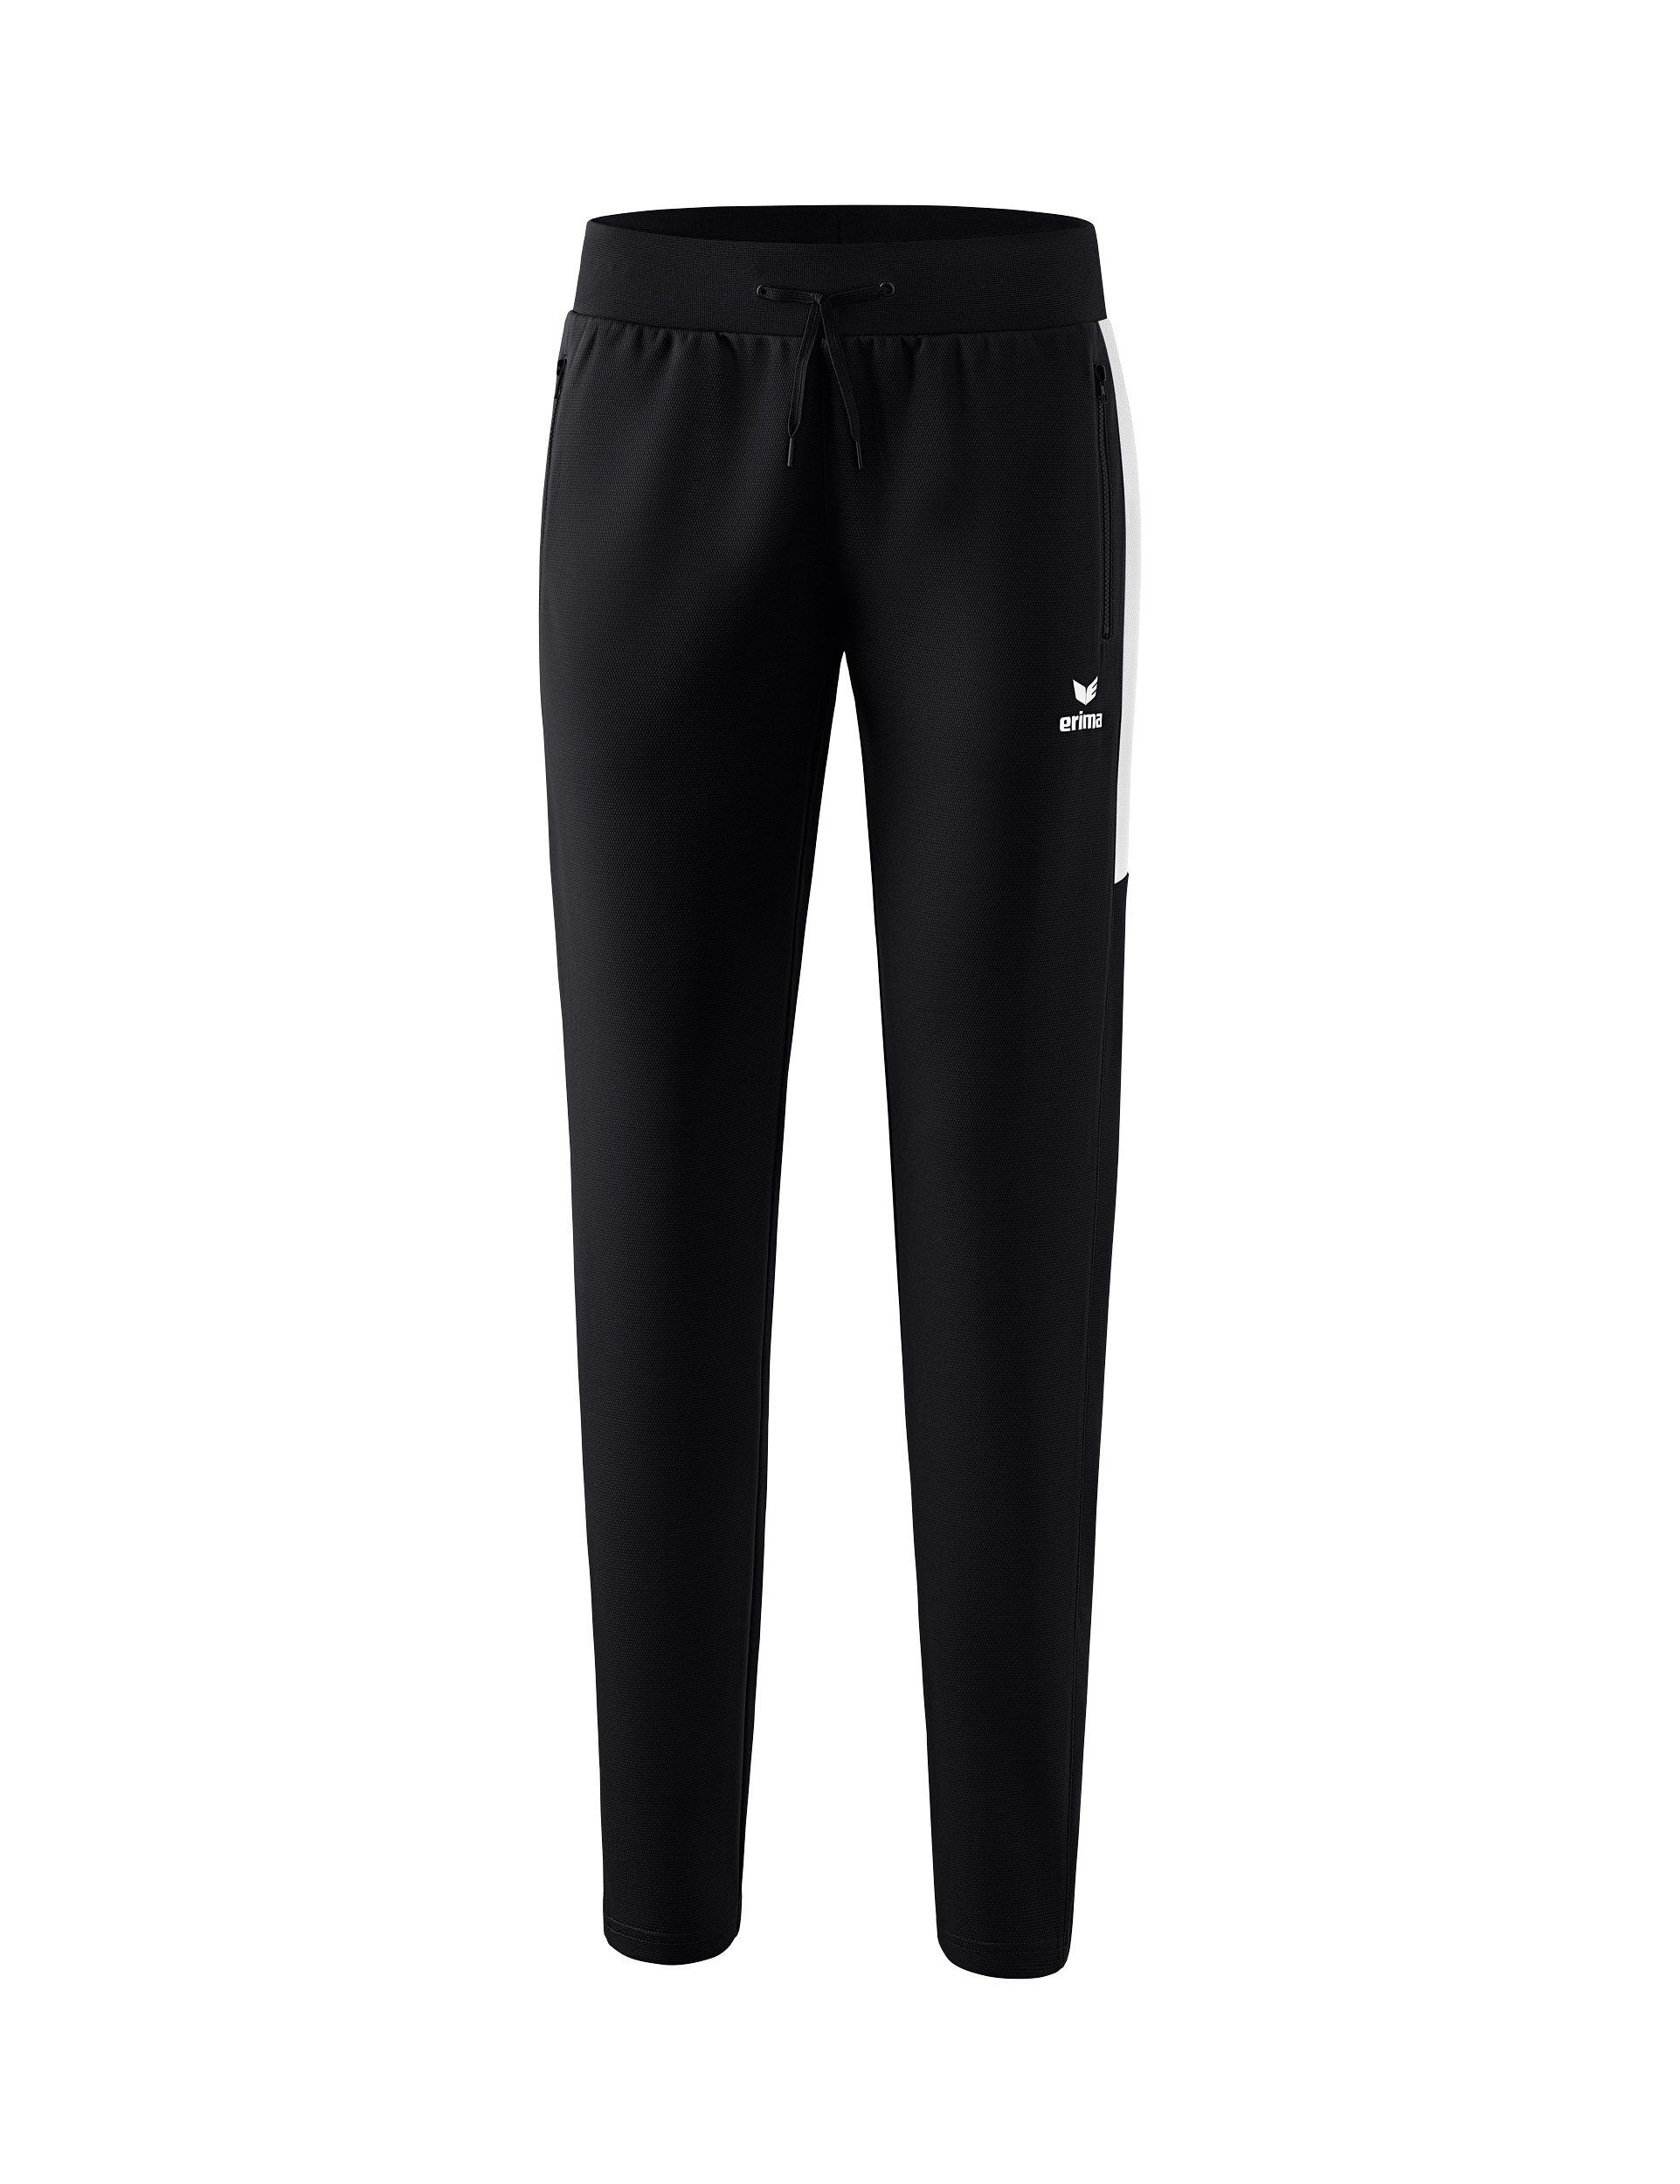 Jogginghose SQUAD pants black/white schwarzweiss Erima training